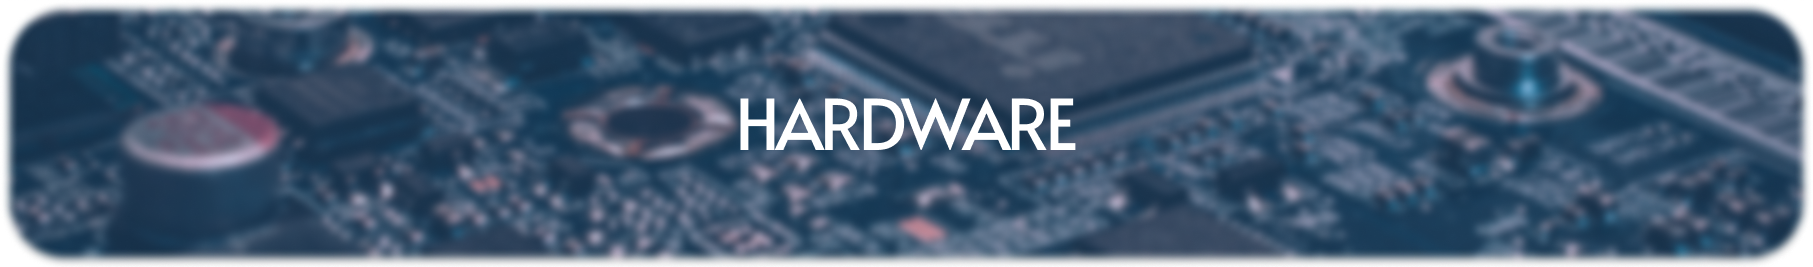 banner-hardware